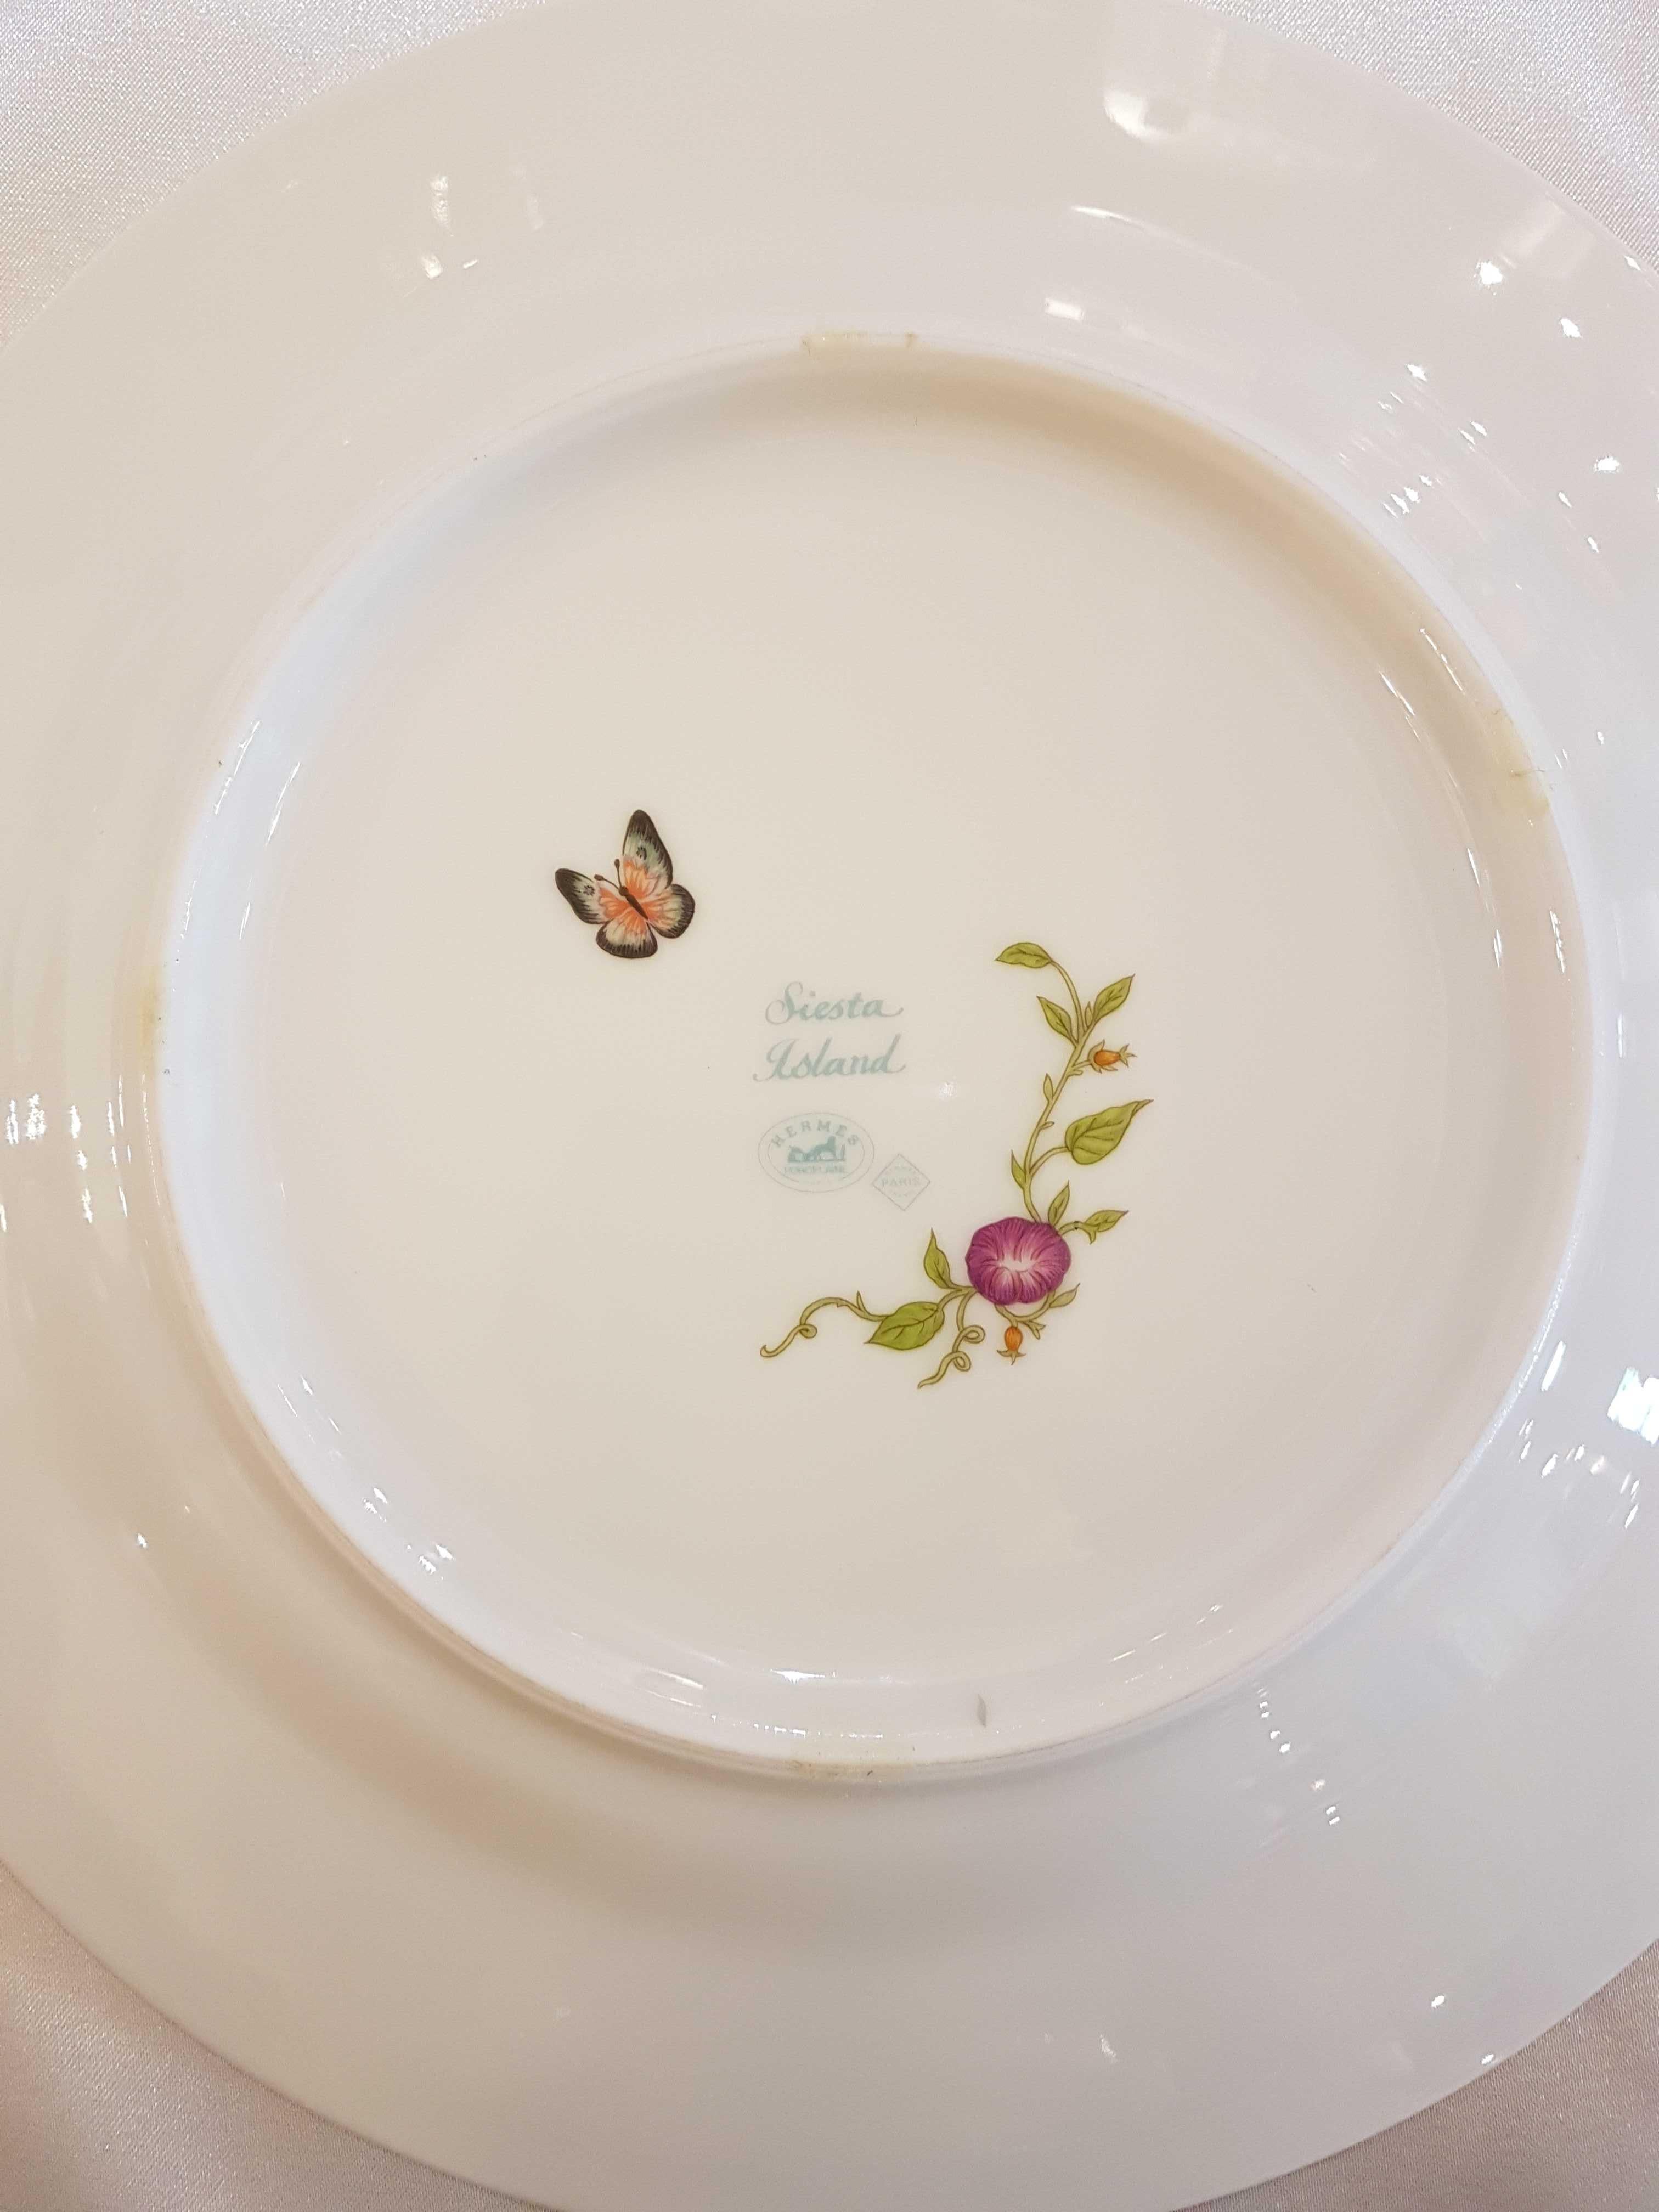 Painted Hermes Siesta Island Porcelain Set of Two Dessert Plates, Modern